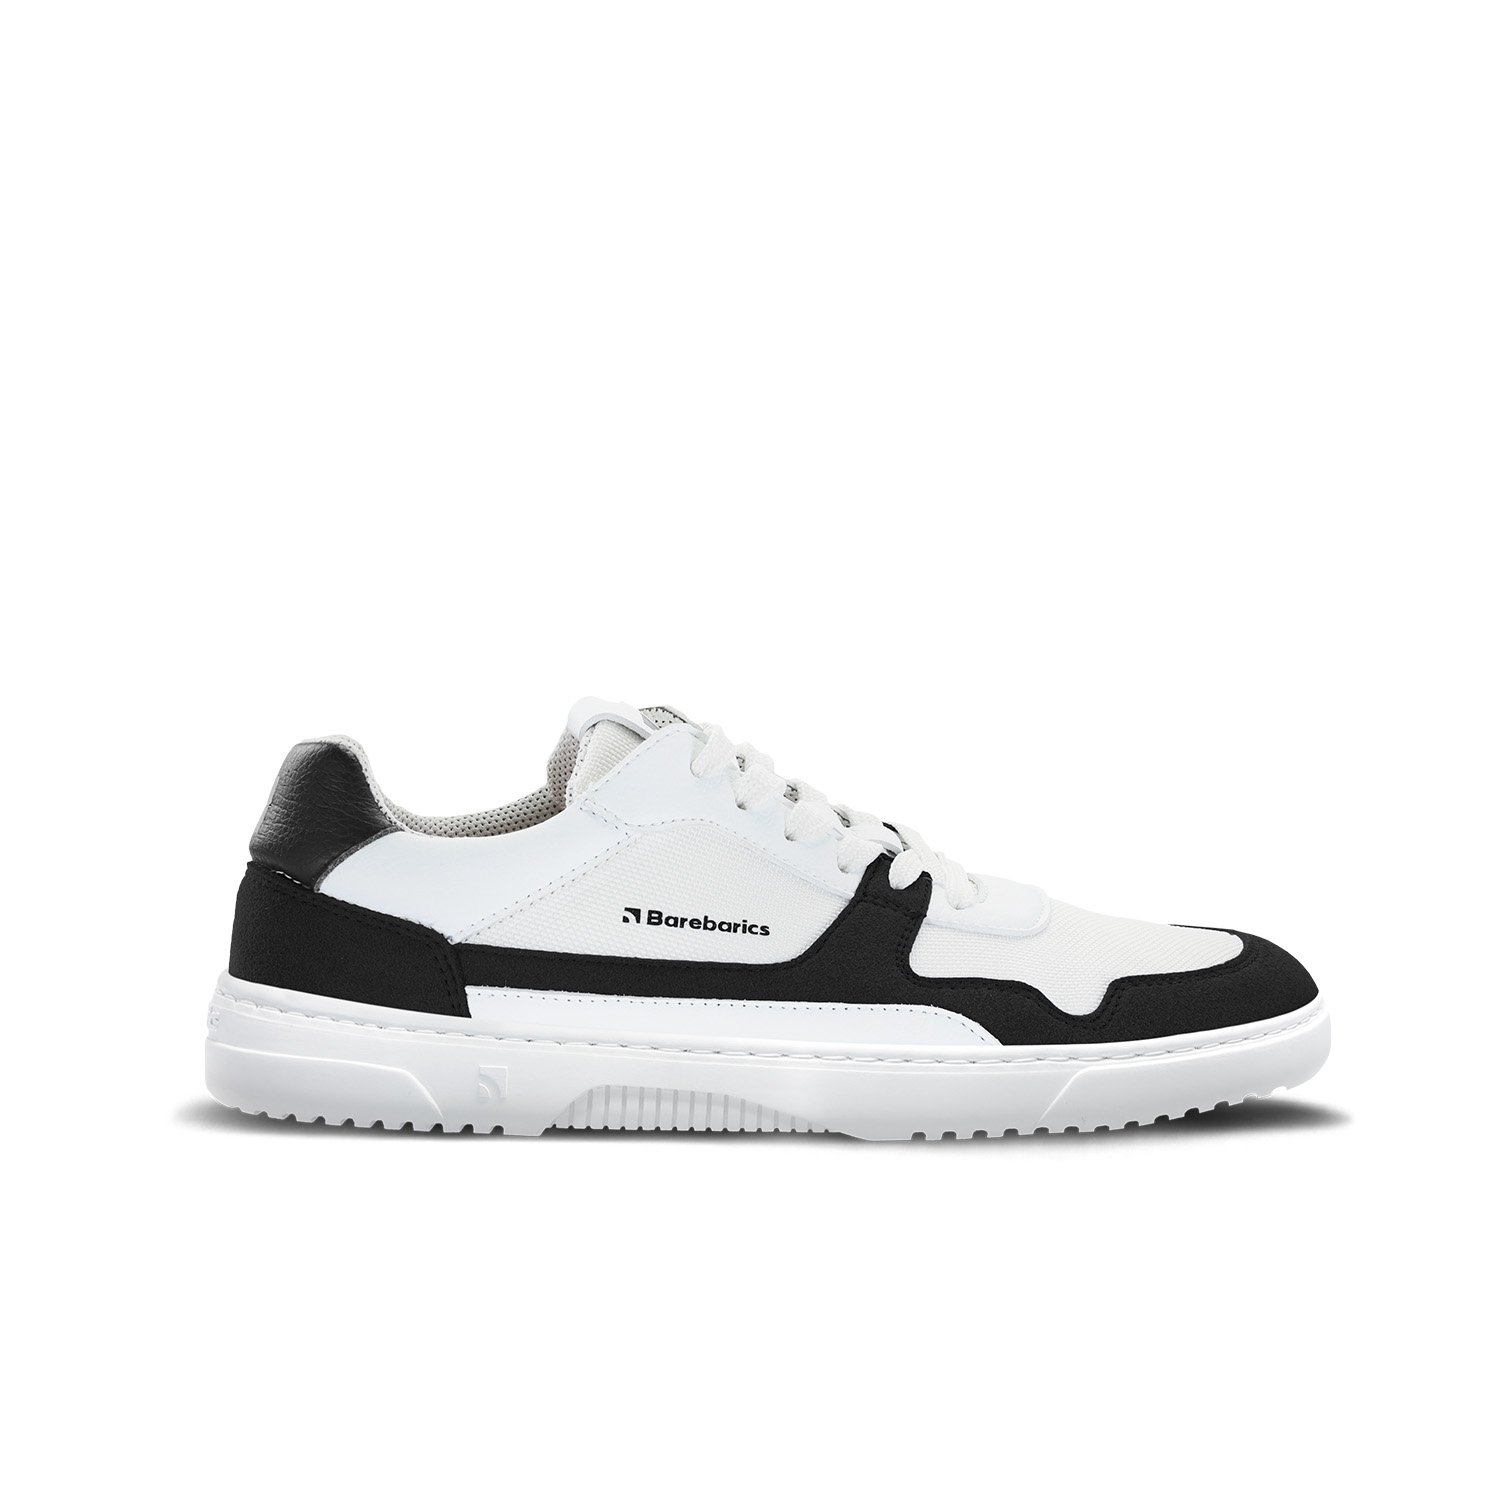 Black Leggings & White Sneakers - Tina Chic  White sneakers, Black leggings,  Wearing black